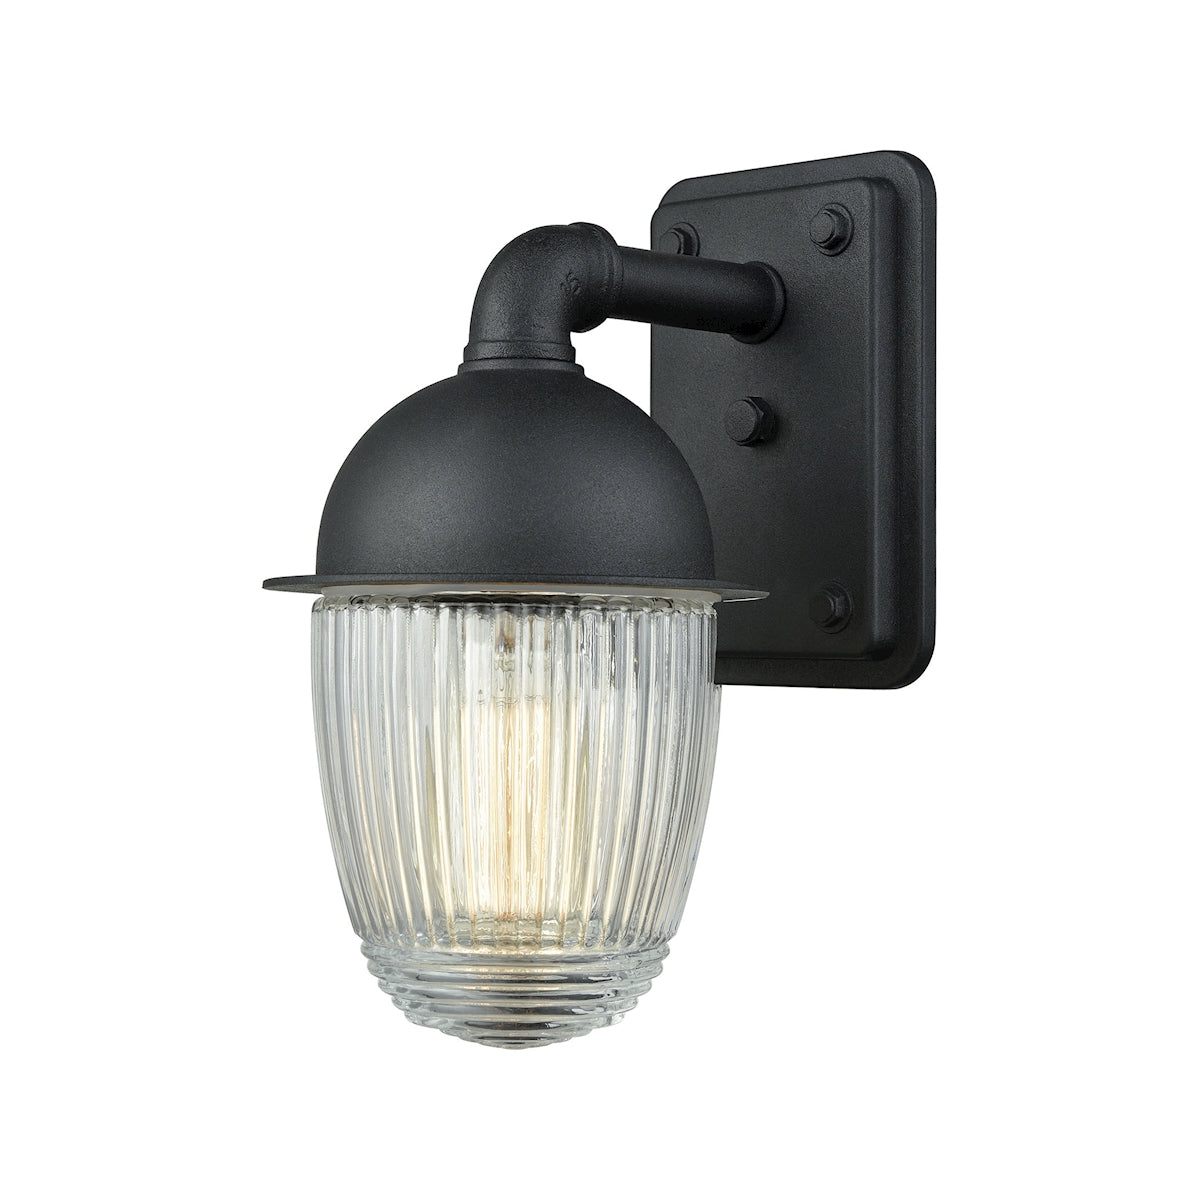 ELK Lighting 45250/1 Channing 1-Light Outdoor Wall Lamp in Matte Black